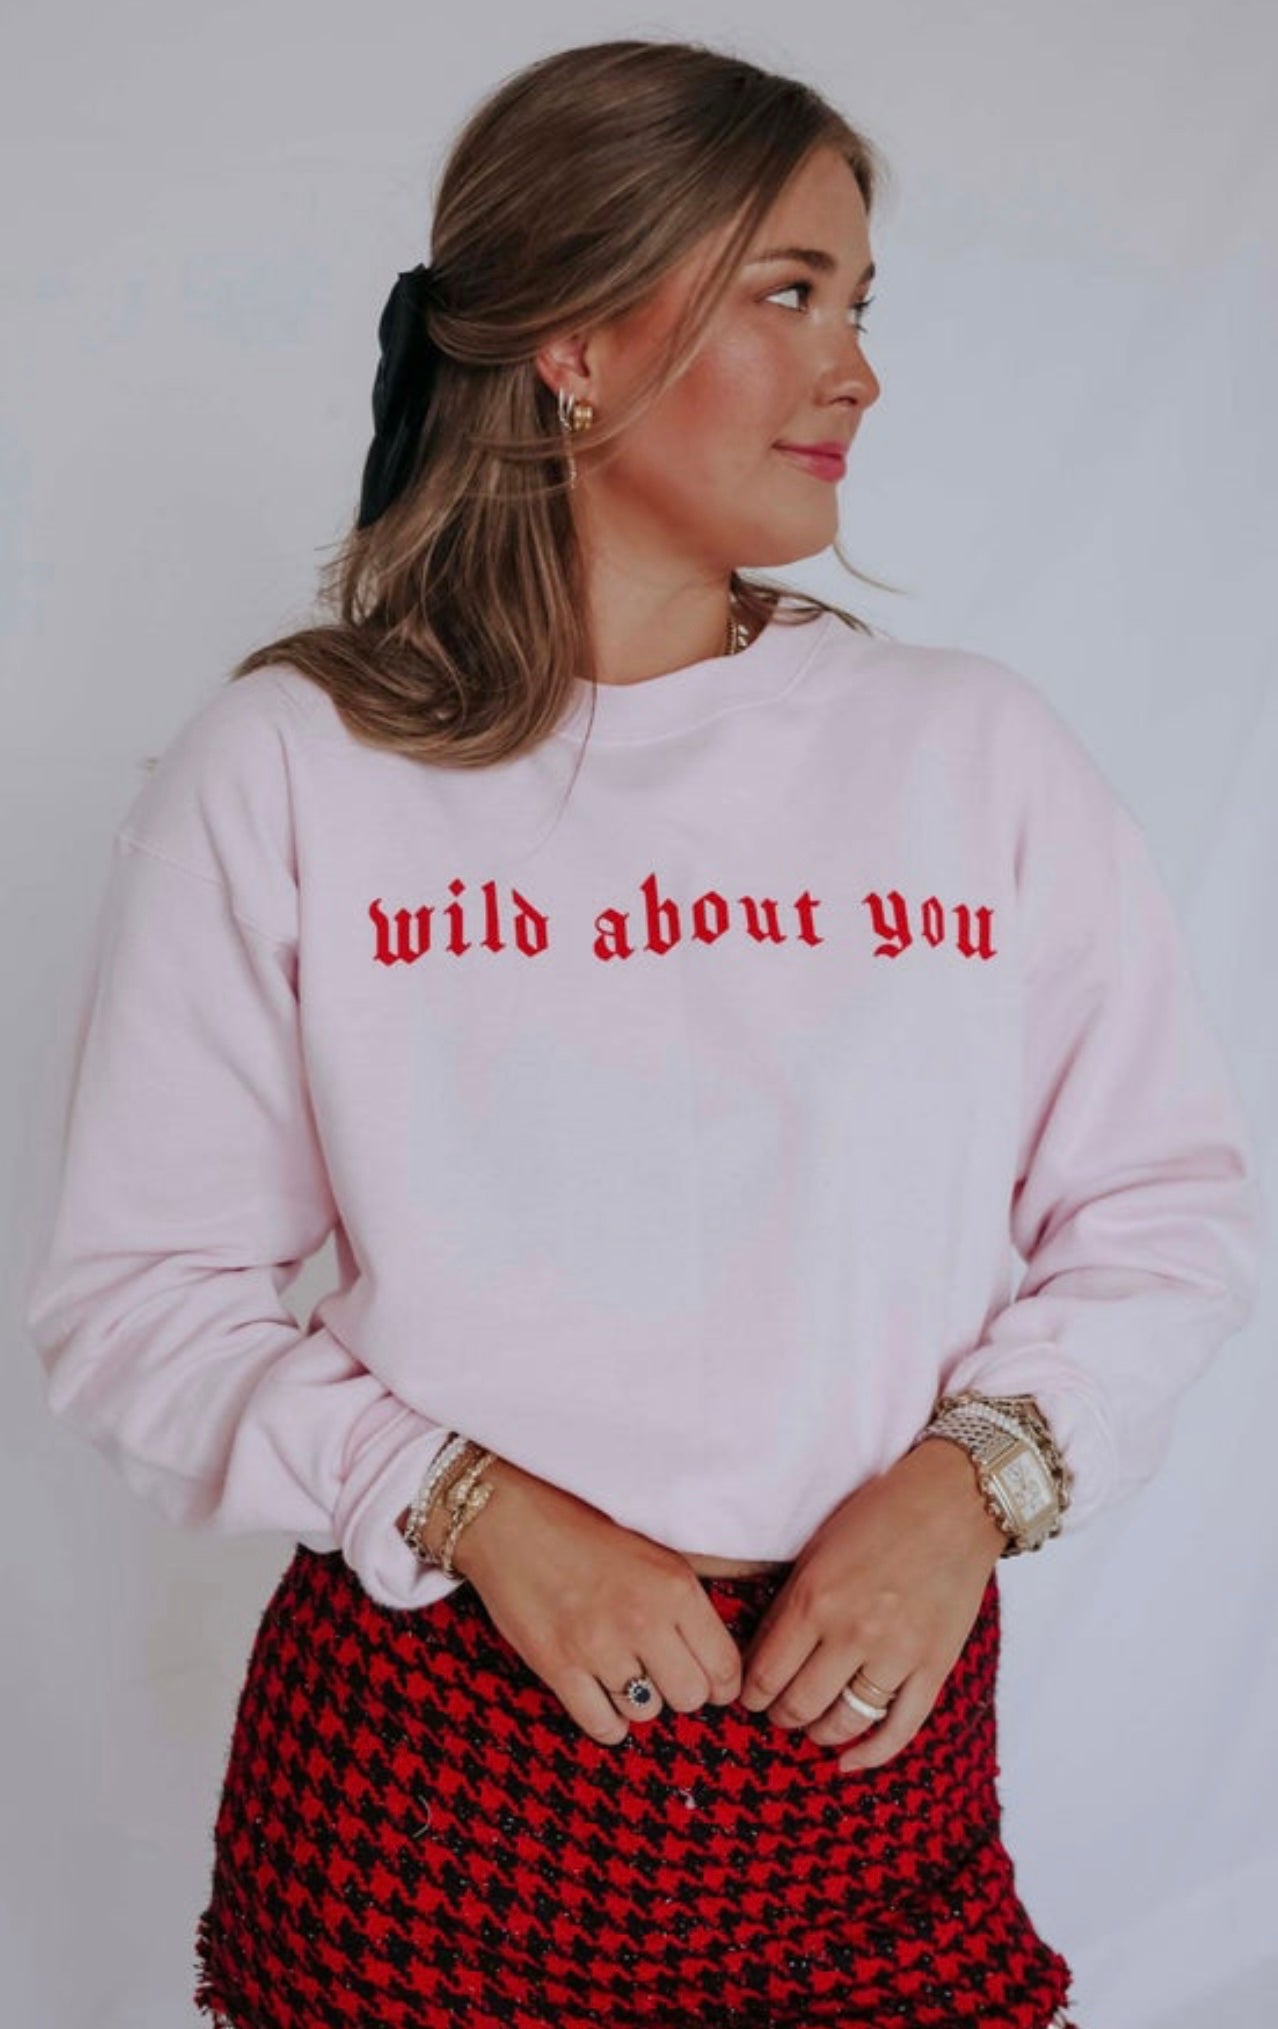 Wild about you sweatshirt